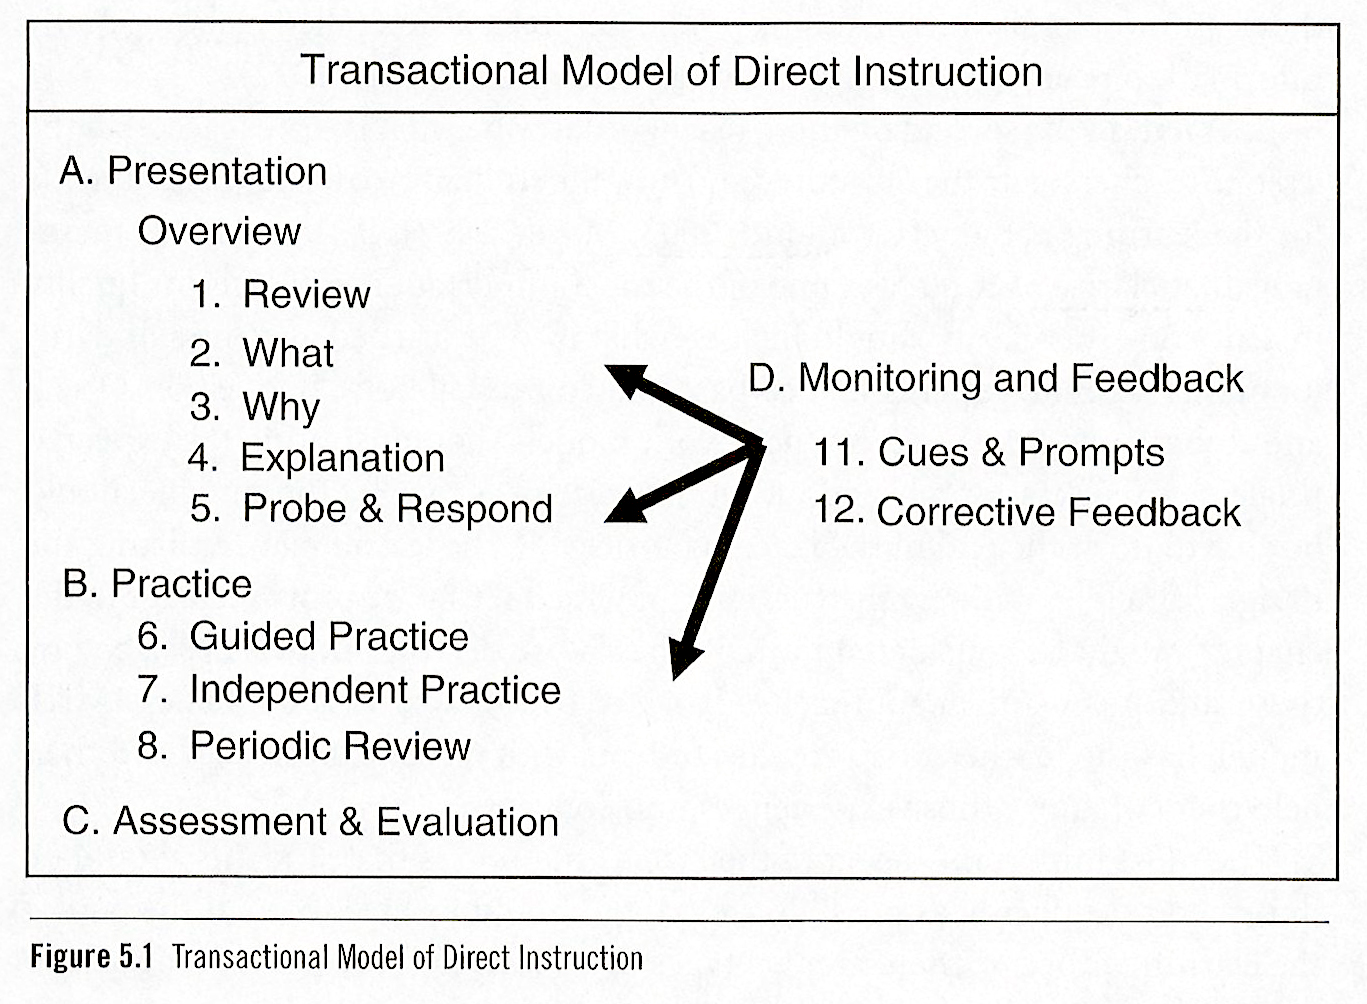 Transactional model of direct instruction.